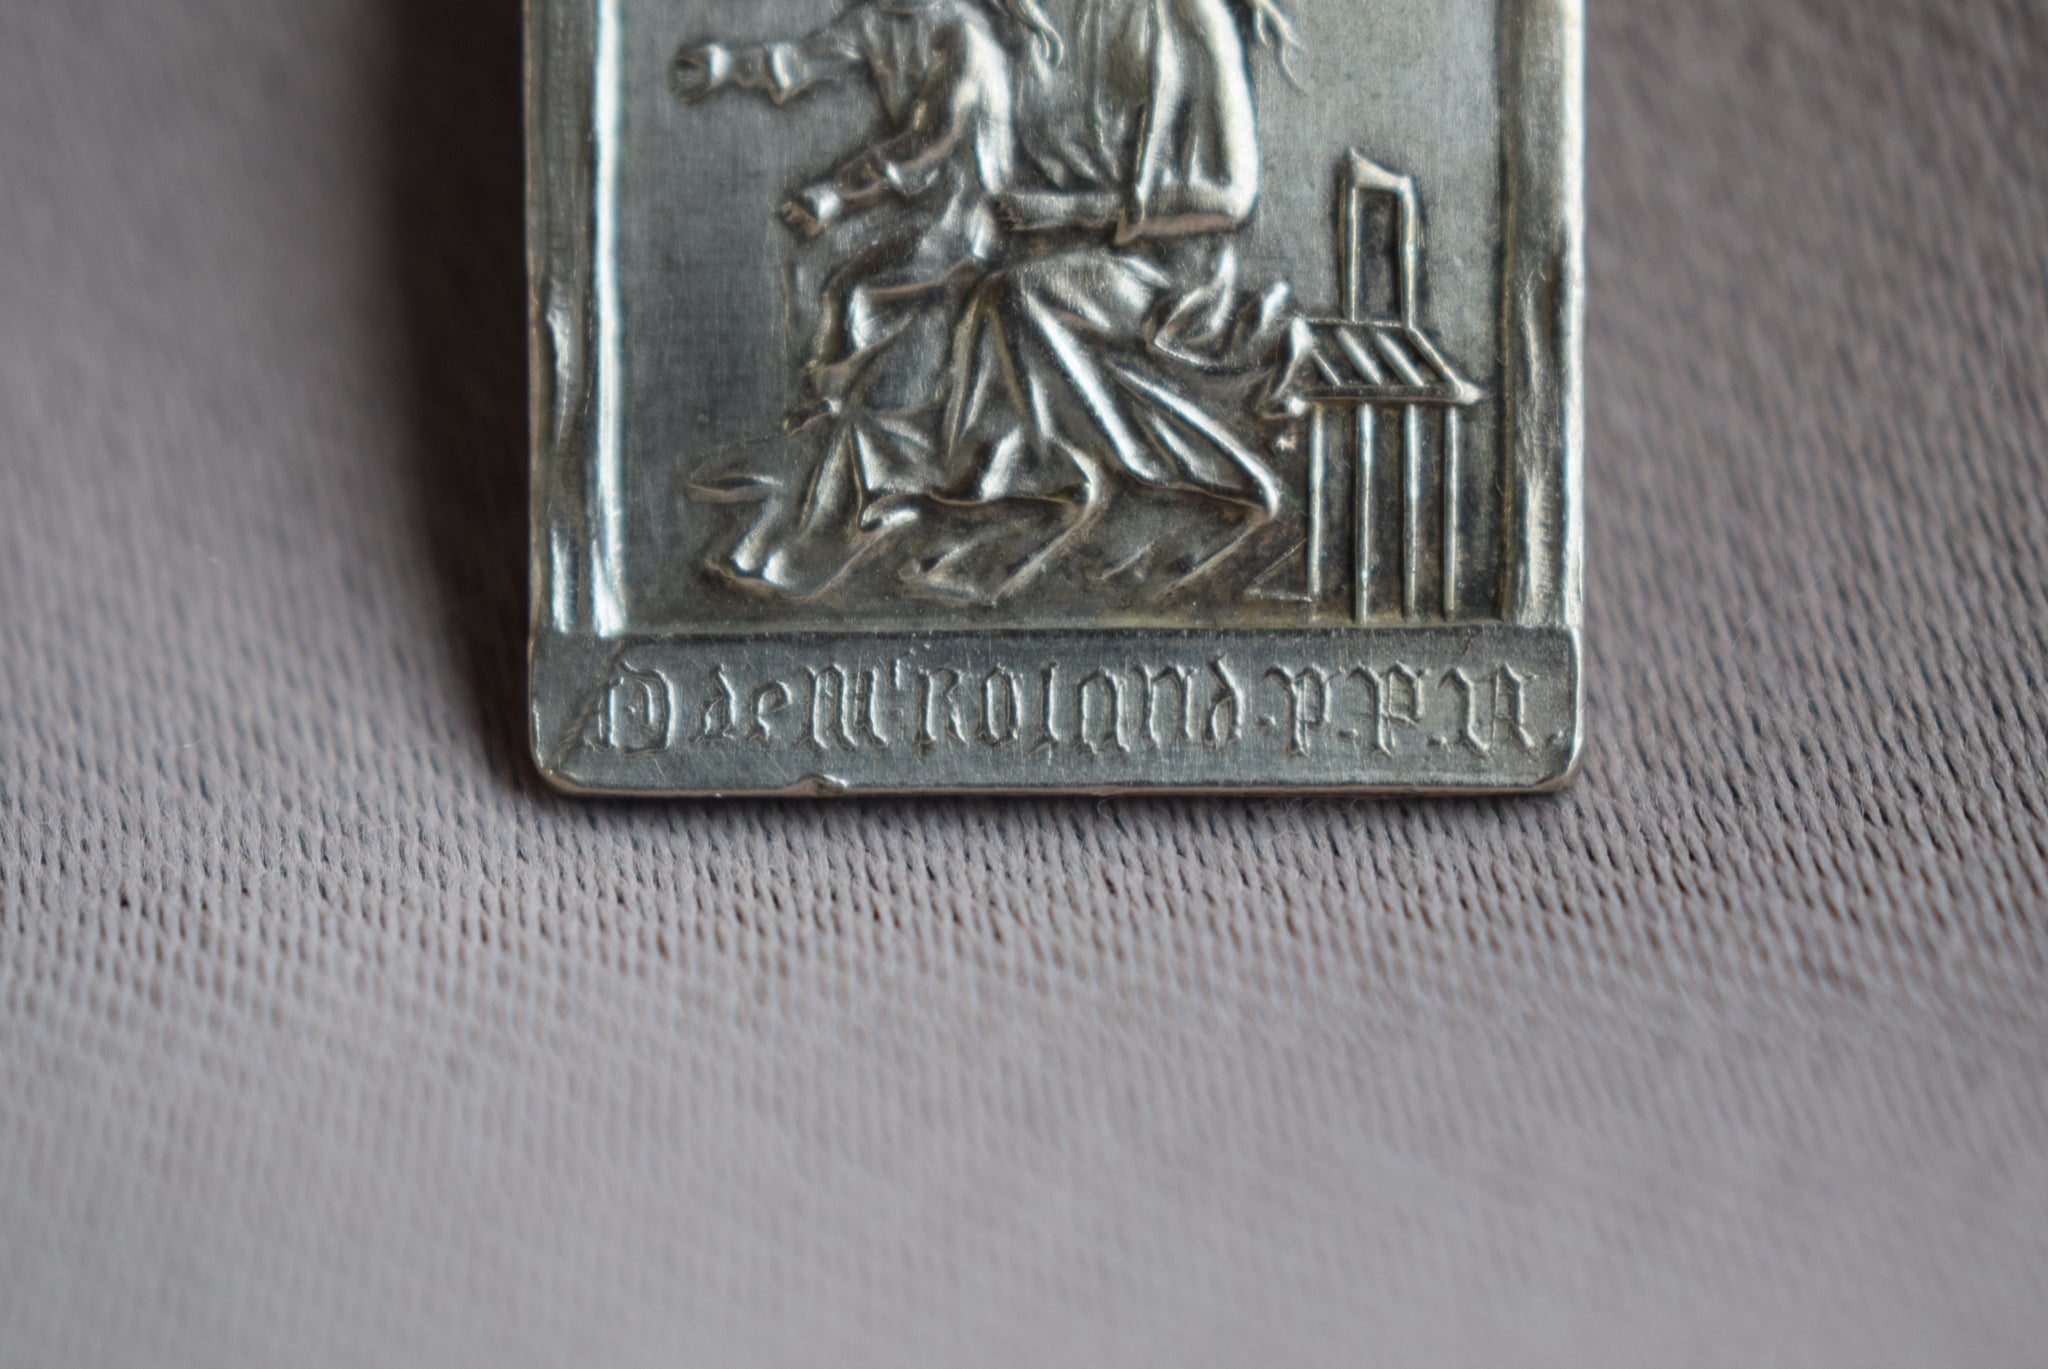 Gothic Medal - Charmantiques